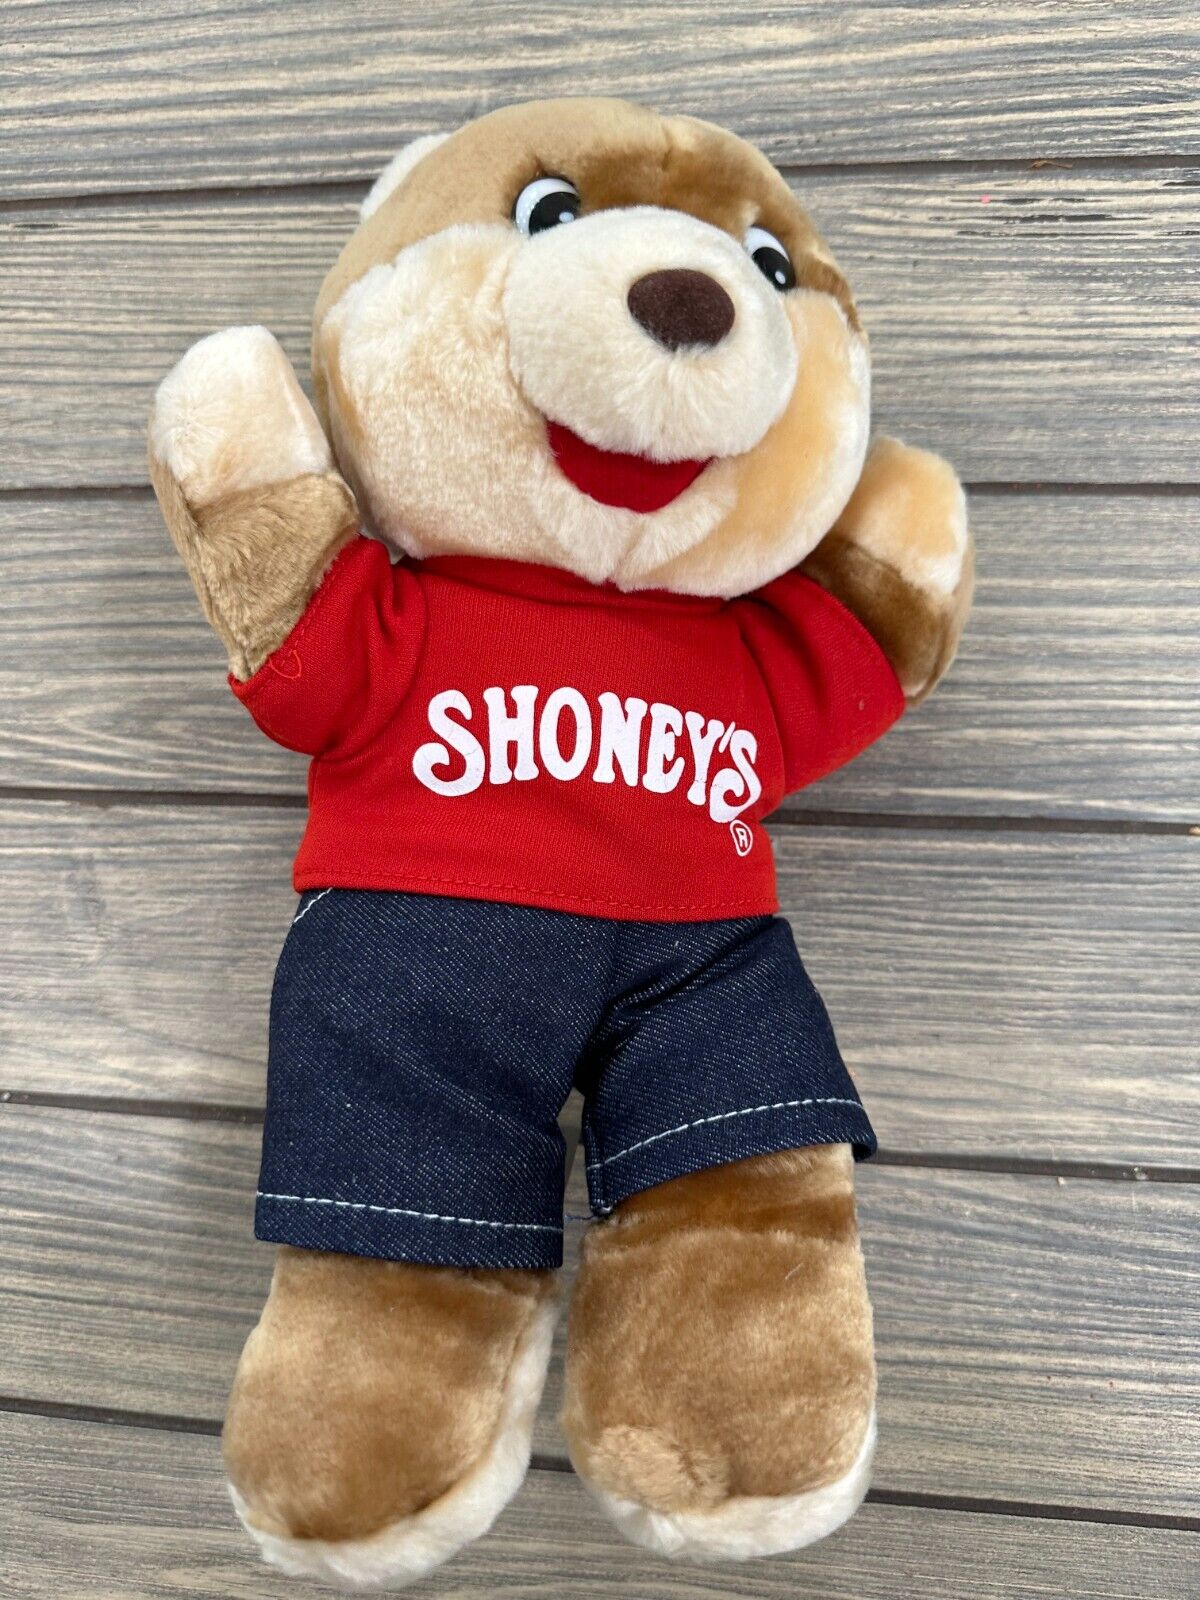 Vintage 1995 Shoney\'s Restaurant Shoney Bear in Outfit Plush Stuffed Animal Toy